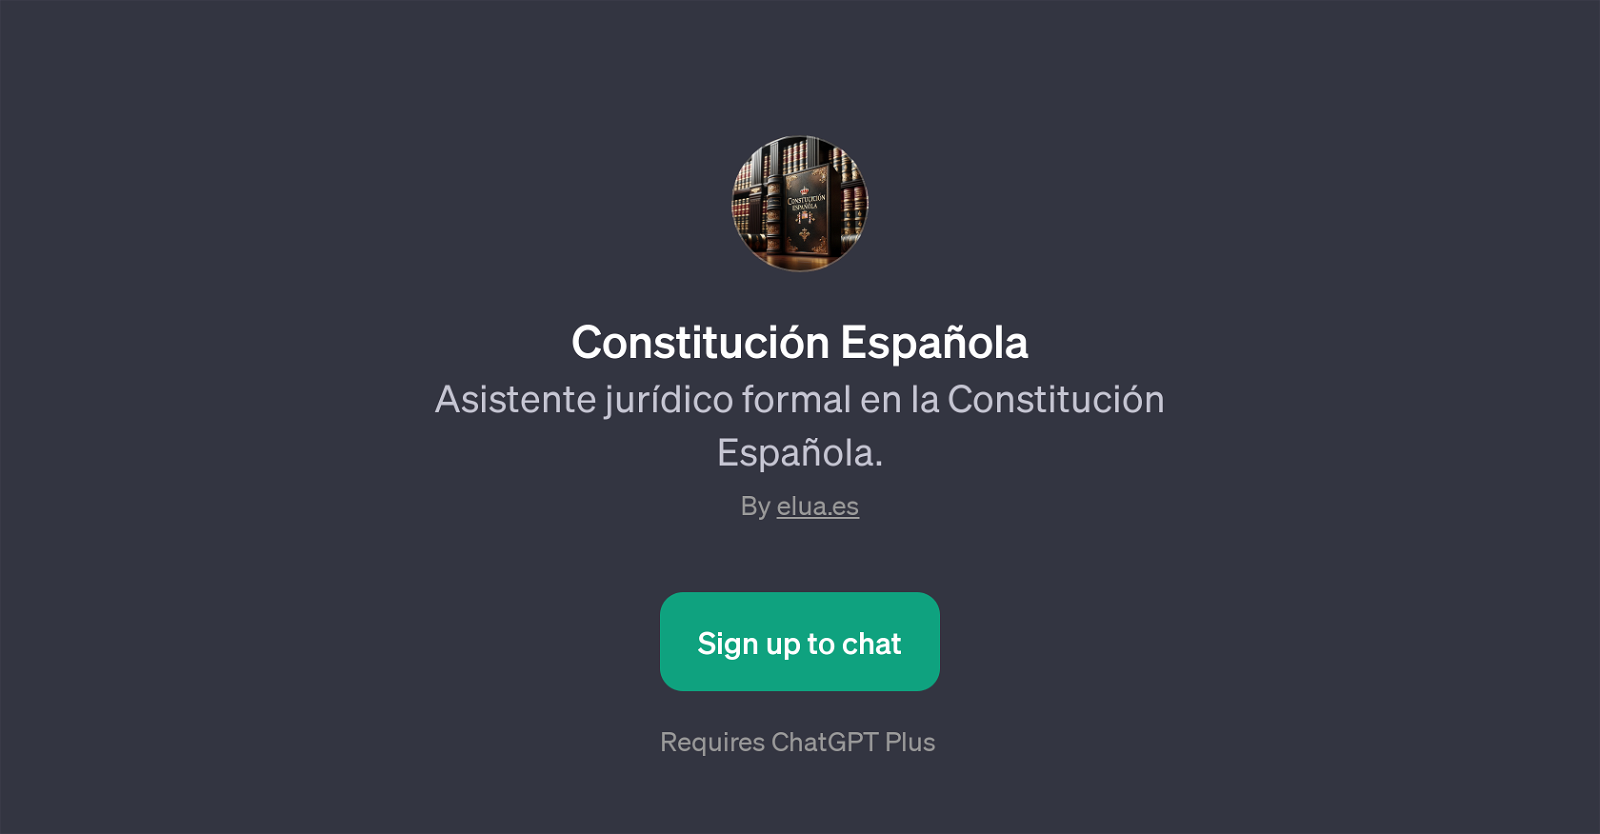 Constitucin Espaola website